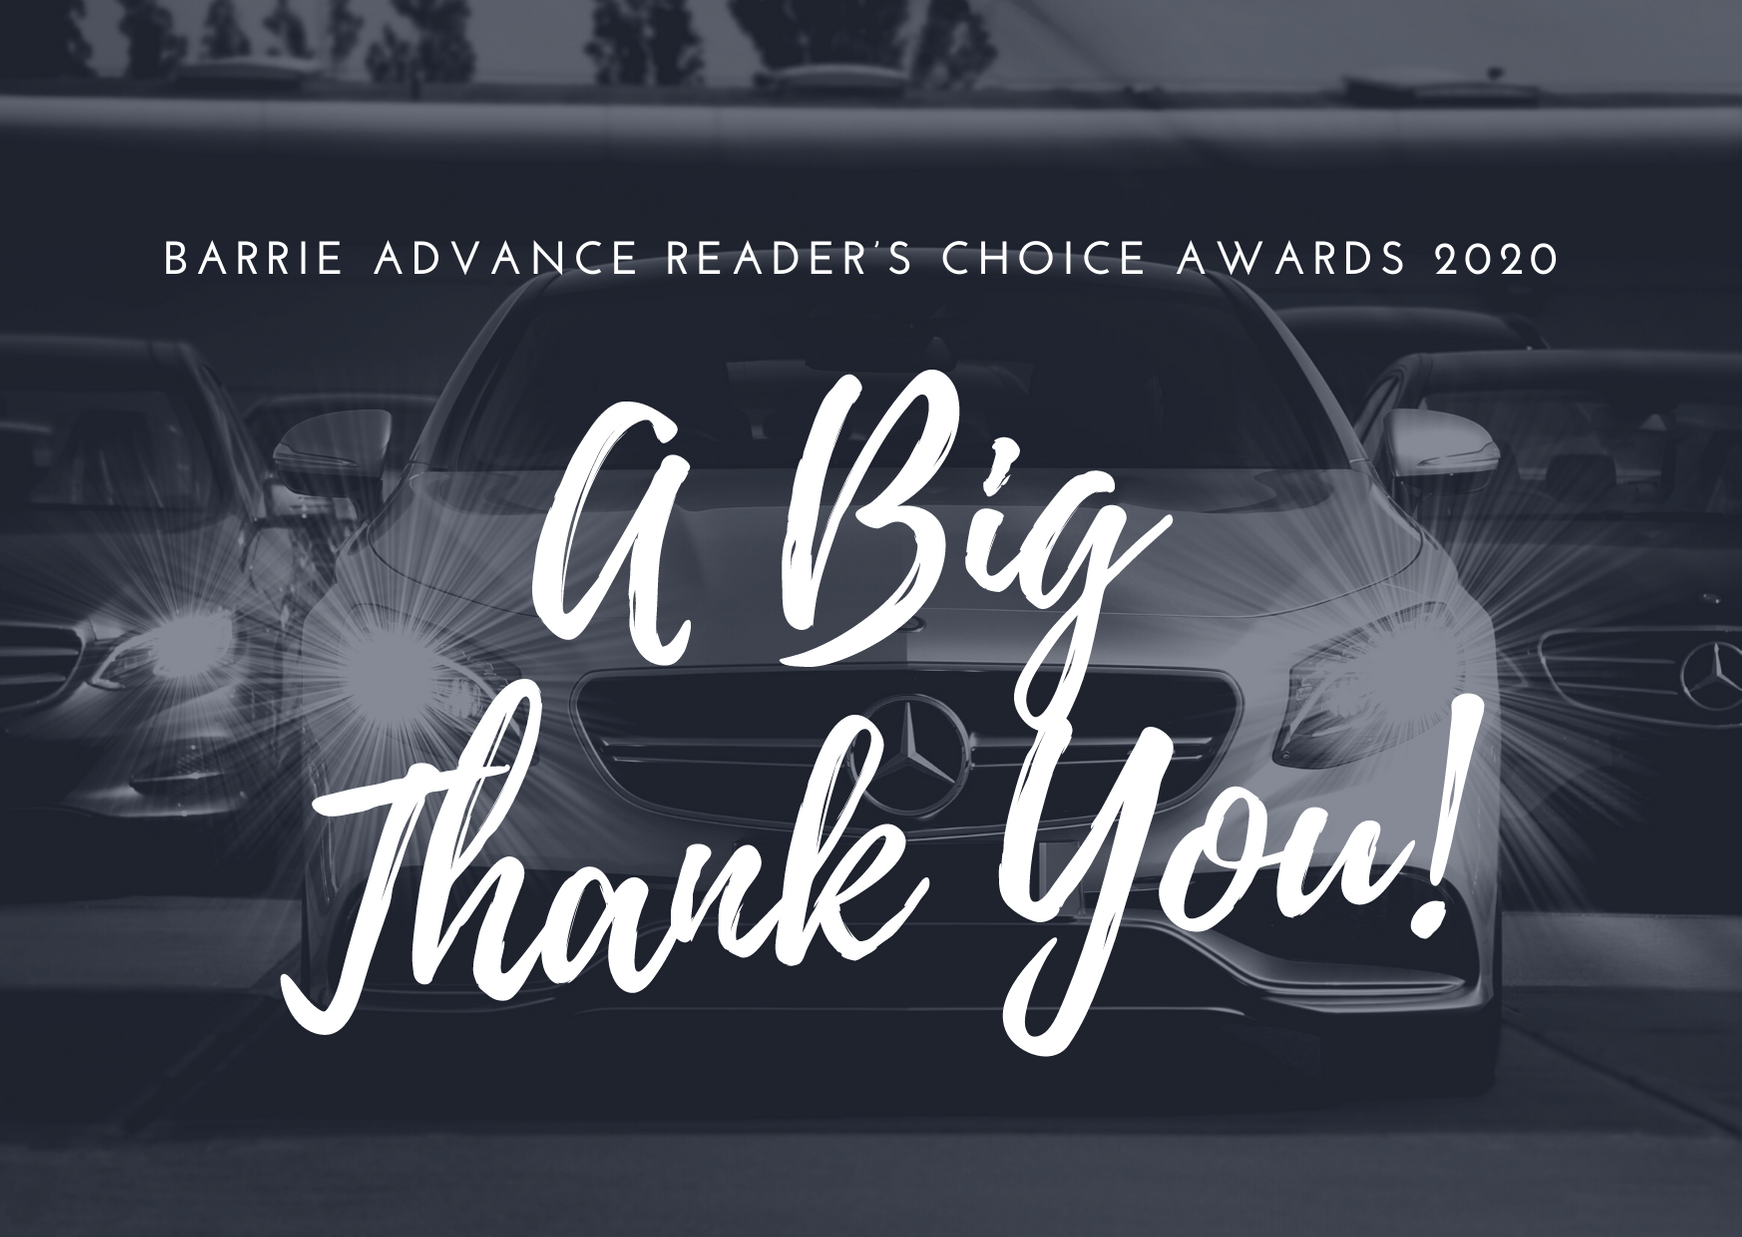 Reader's Choice Awards Thank you